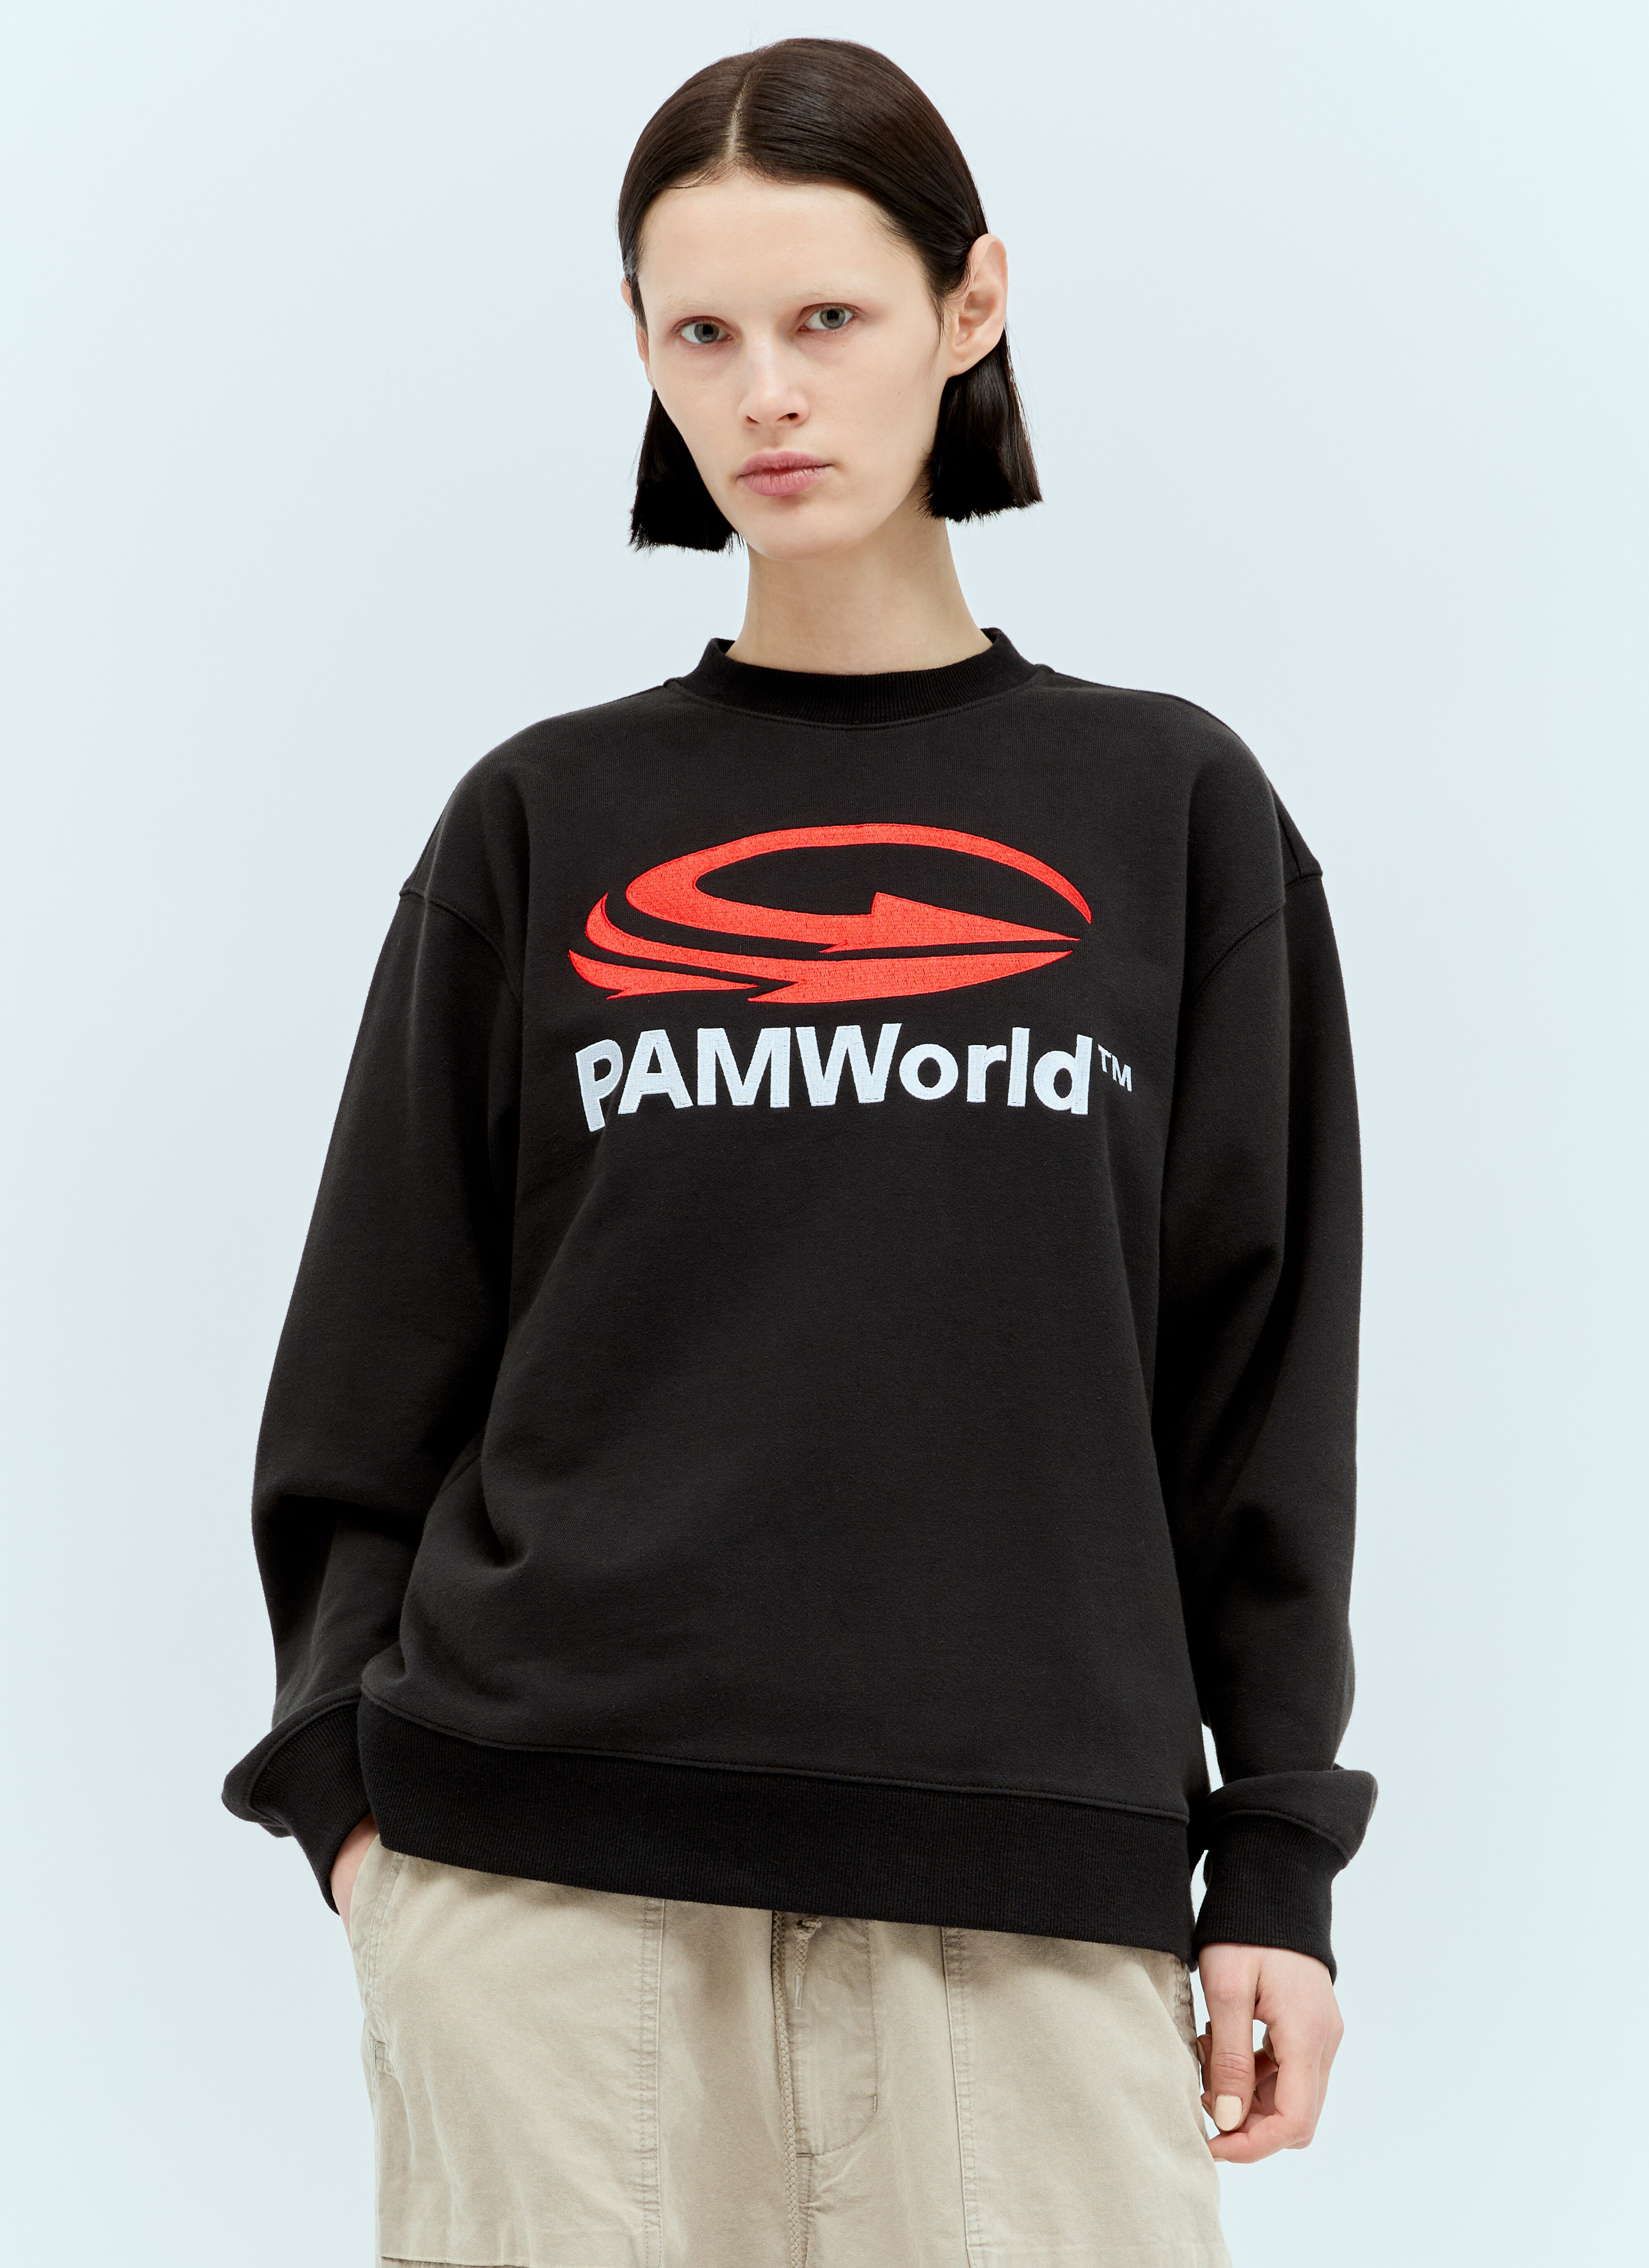 P.A.M. P.A.M World 2.0 Sweatshirt Black pam0357004